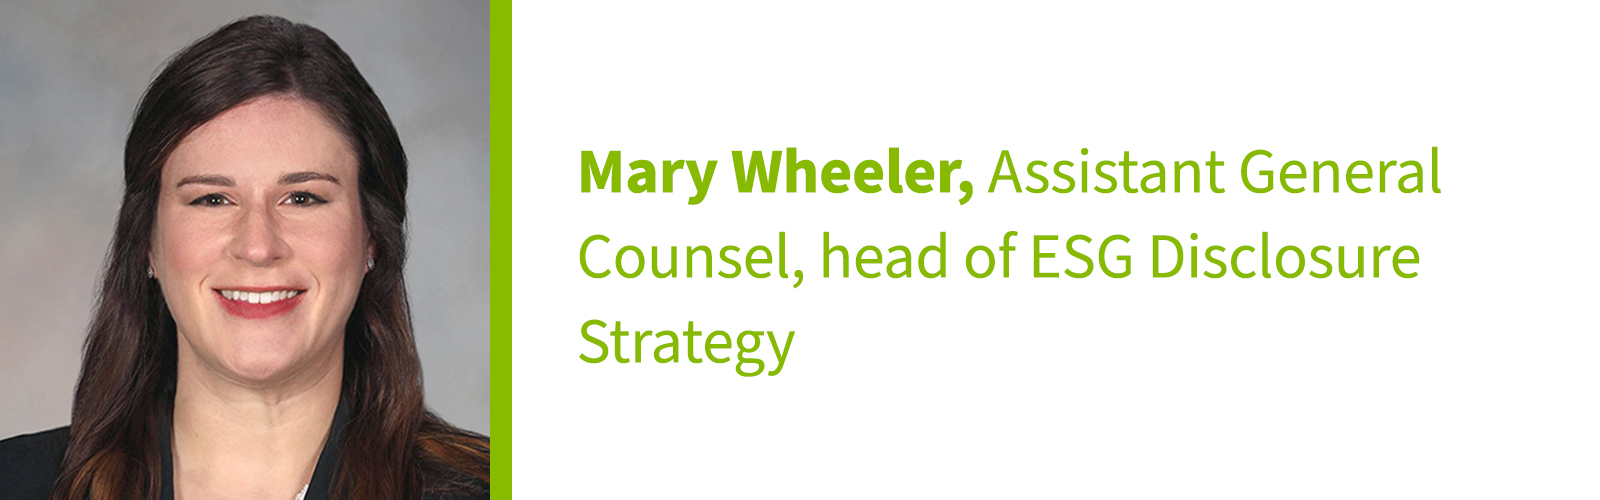 Mary Wheeler headshot and title